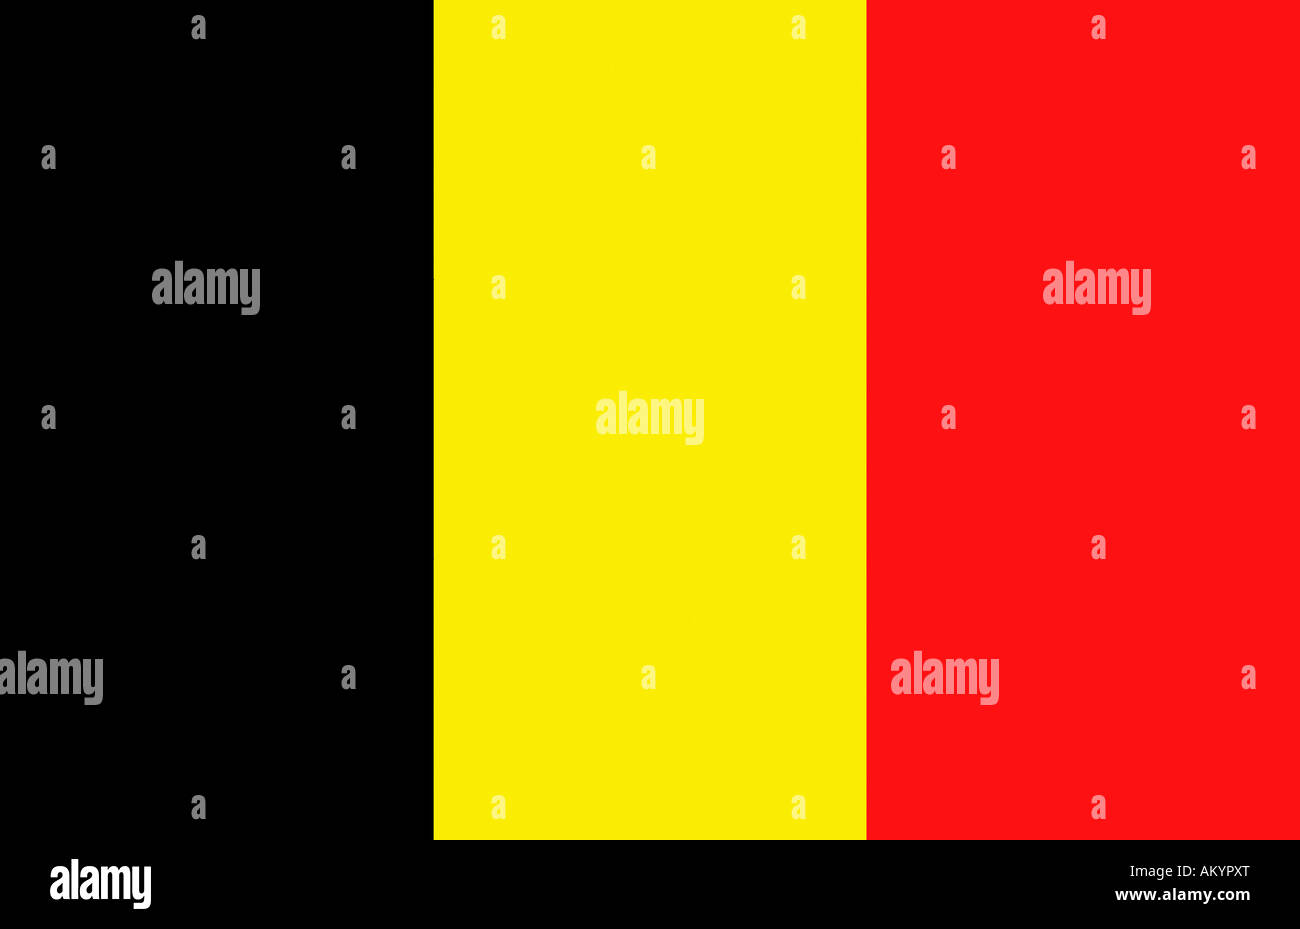 The flag of Belgium - graphic Stock Photo